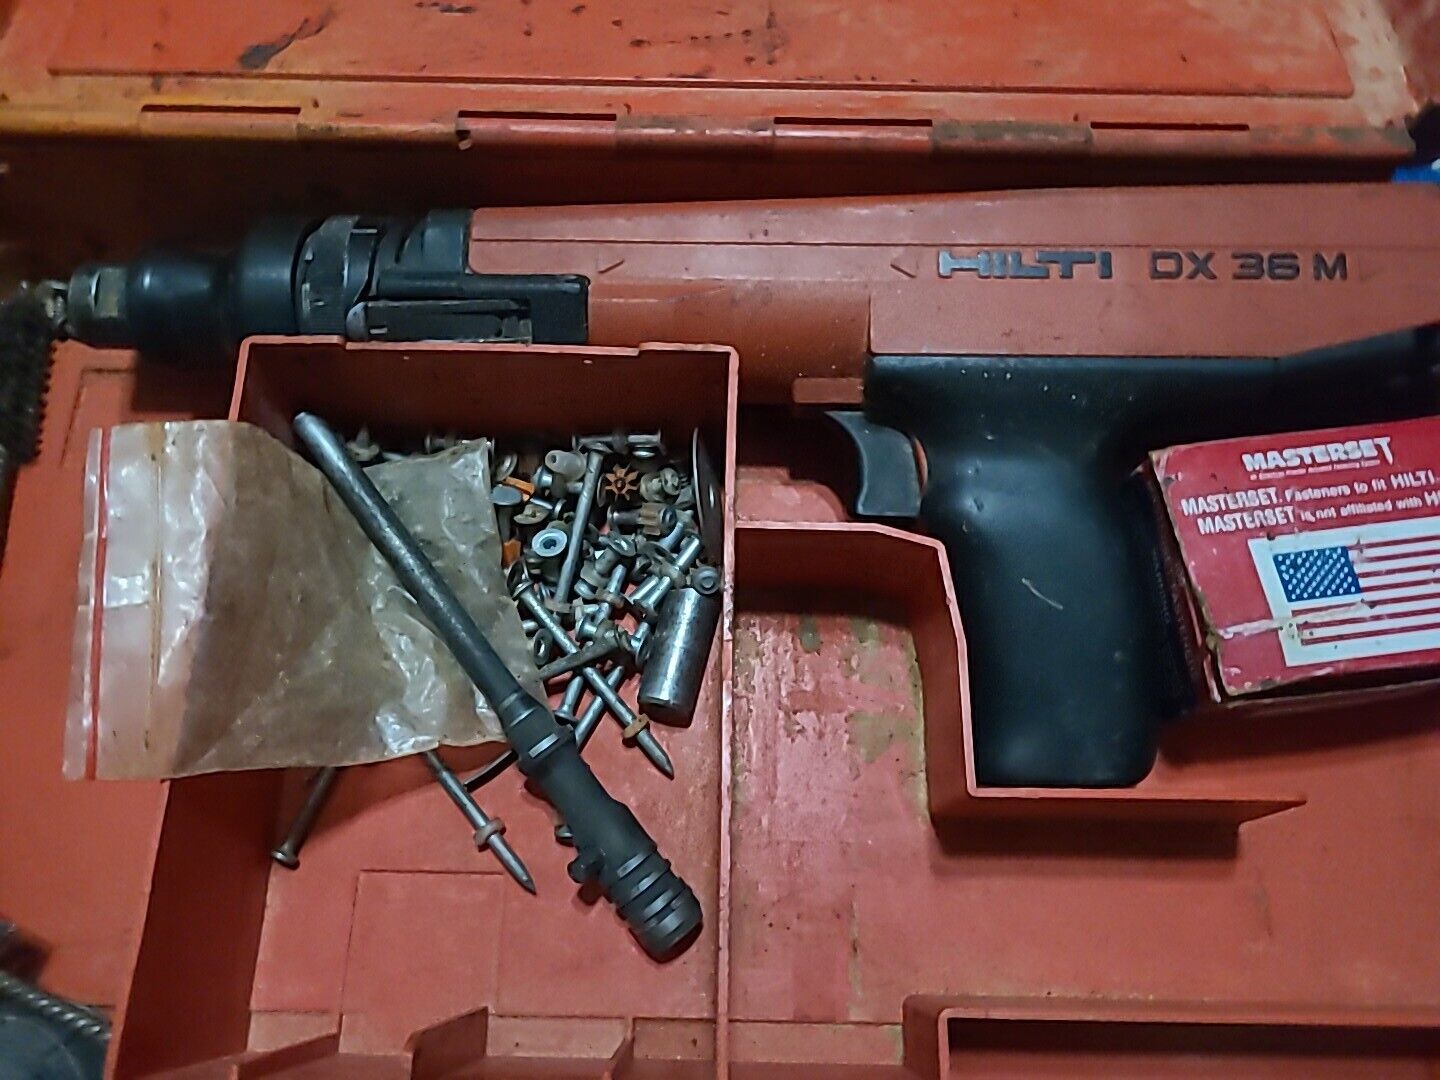 Hilti DX 36M Powder Actuated Nail Stud Gun Works Fine